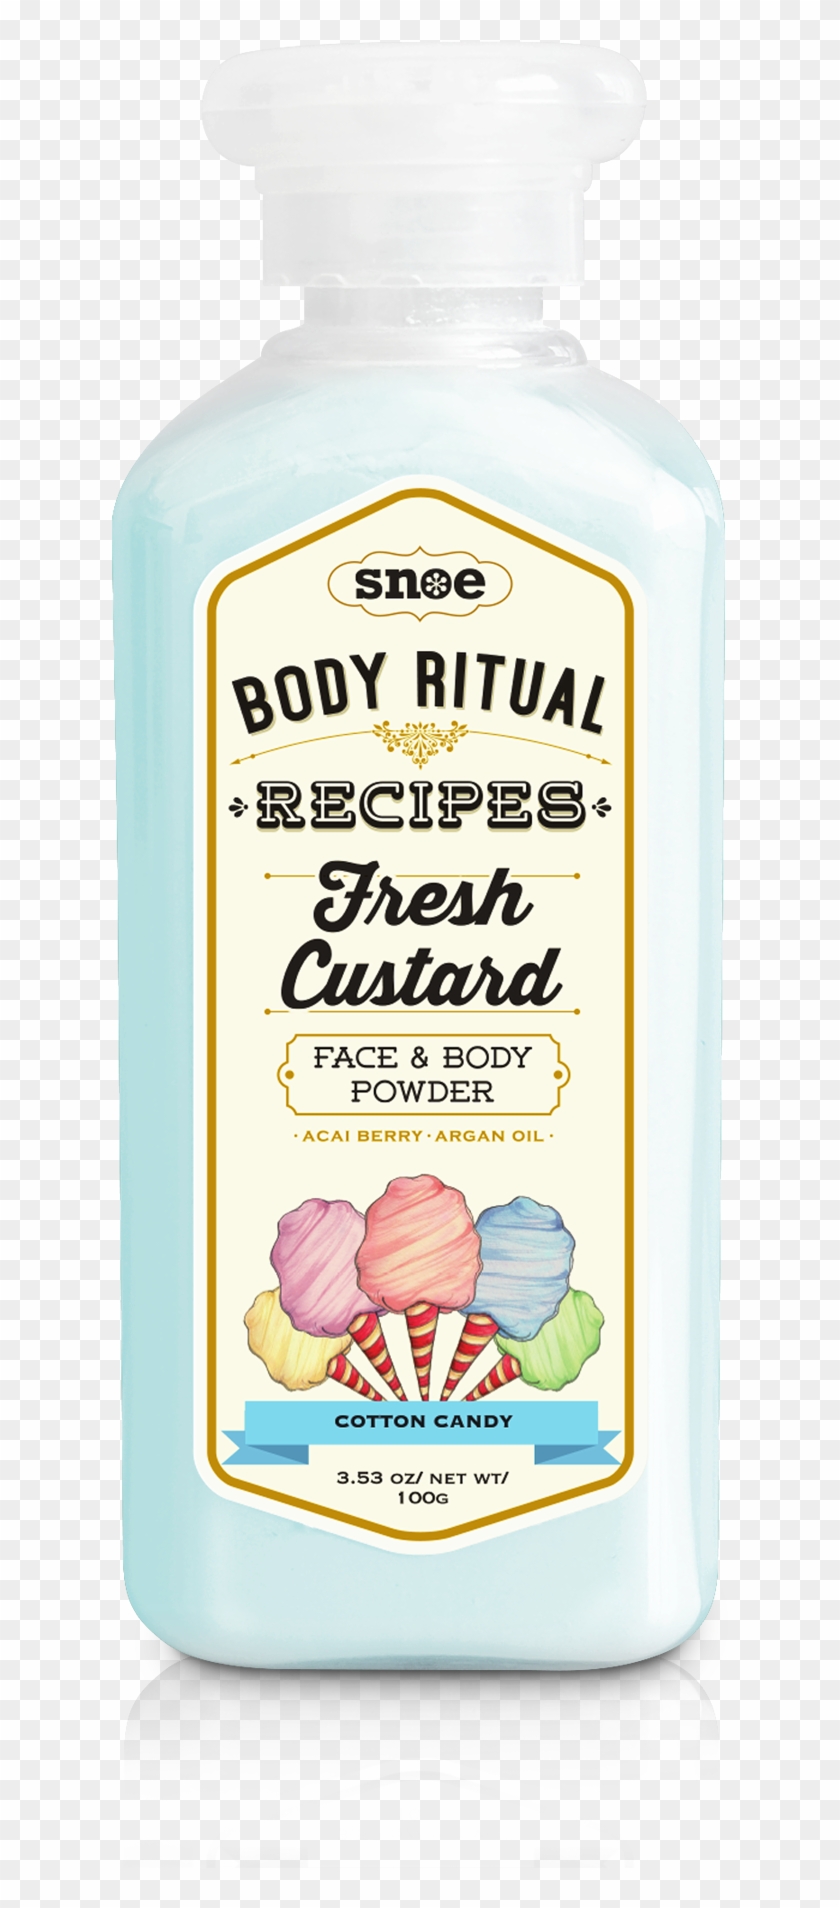 Body Ritual Recipes Fresh Custard Powder In Cotton - Ouidad Hair Products Clipart